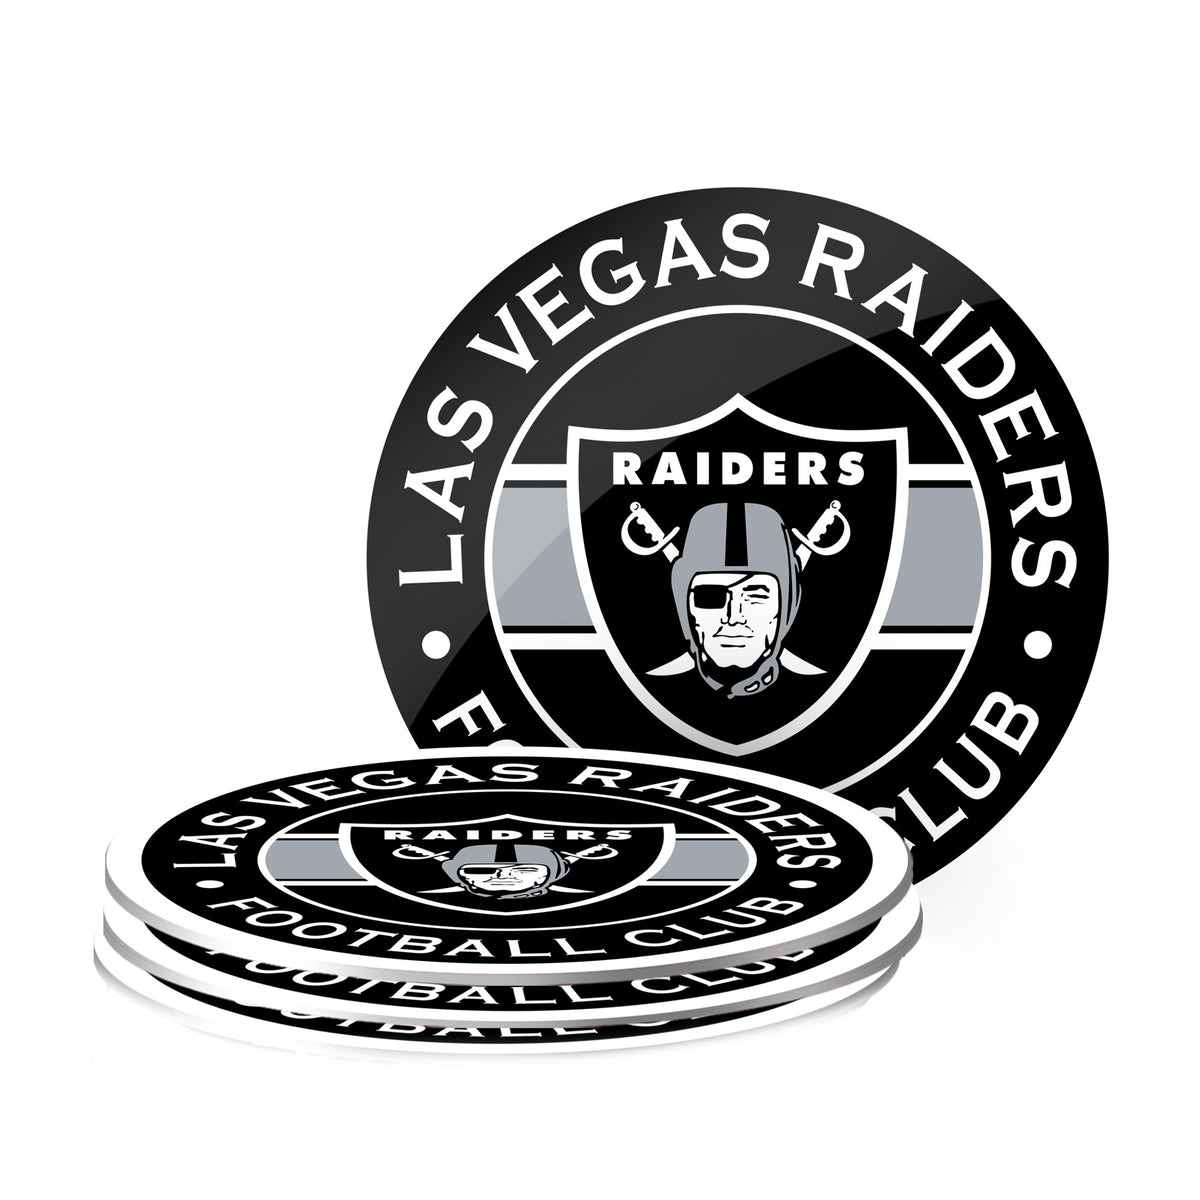 Las Vegas Raiders Coasters (4 pack)